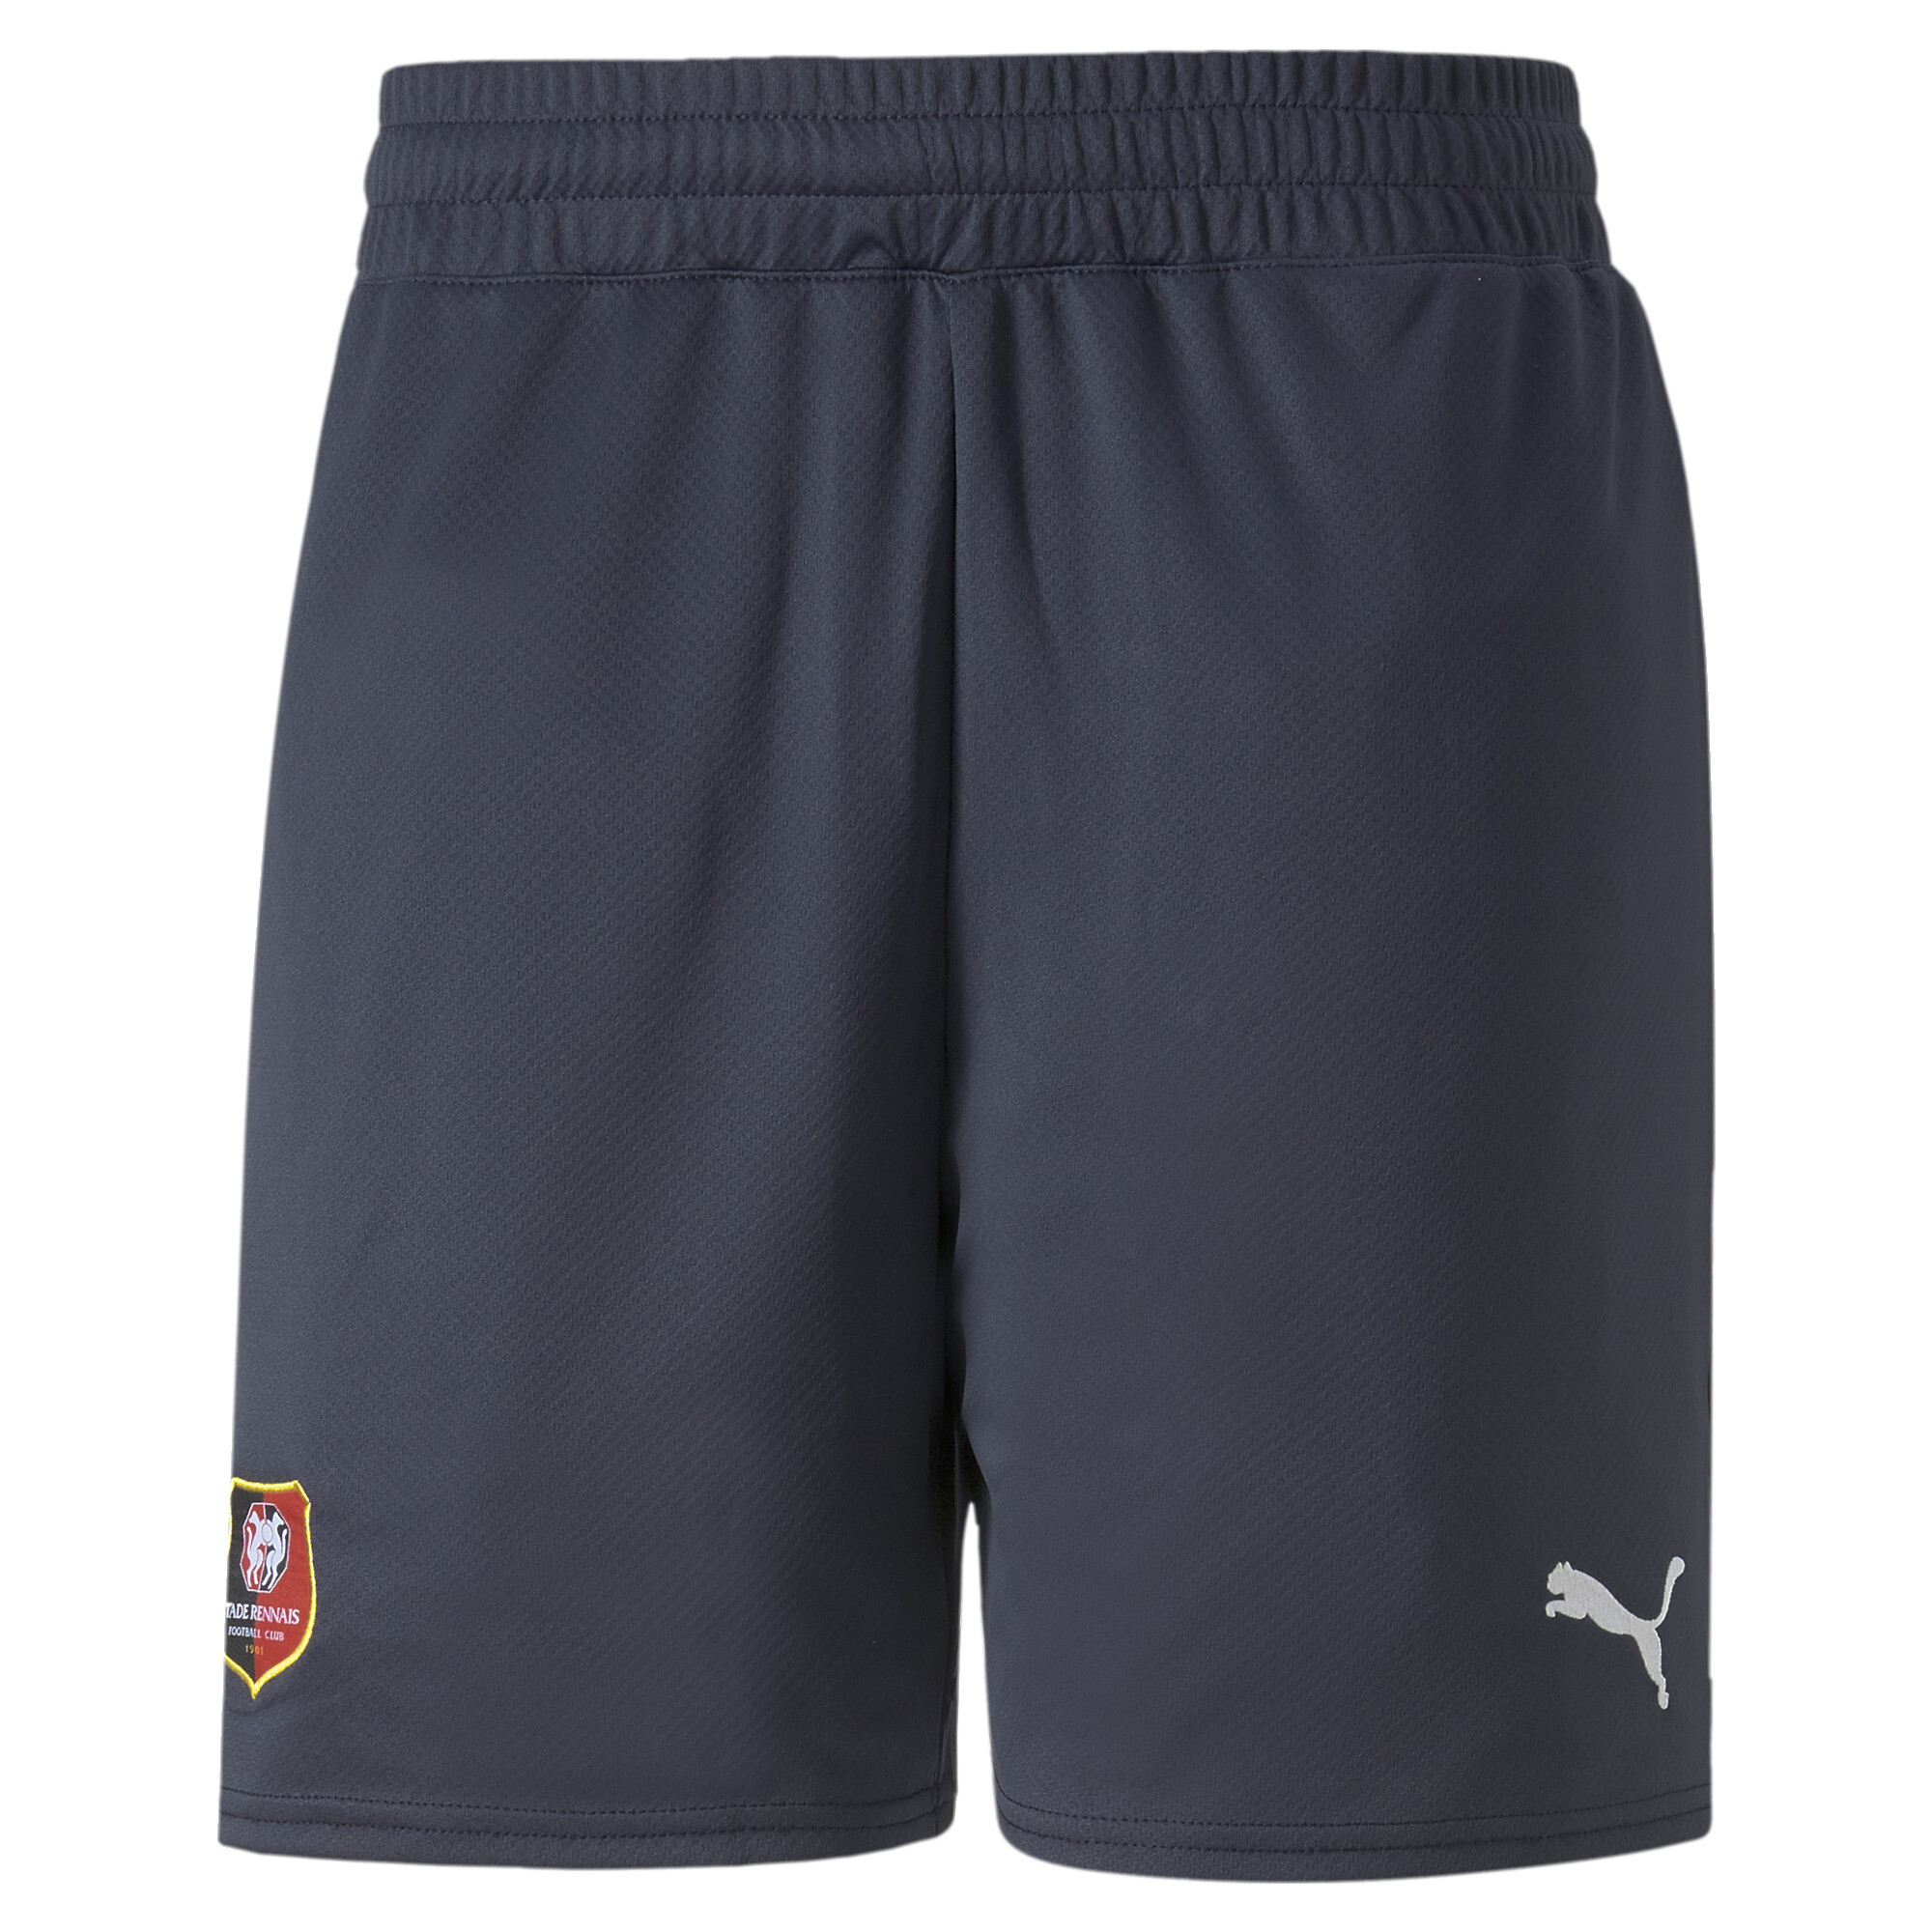 Men's Puma Stade Rennais F.C. 22/23 Replica Shorts, Blue, Size XXL, Clothing